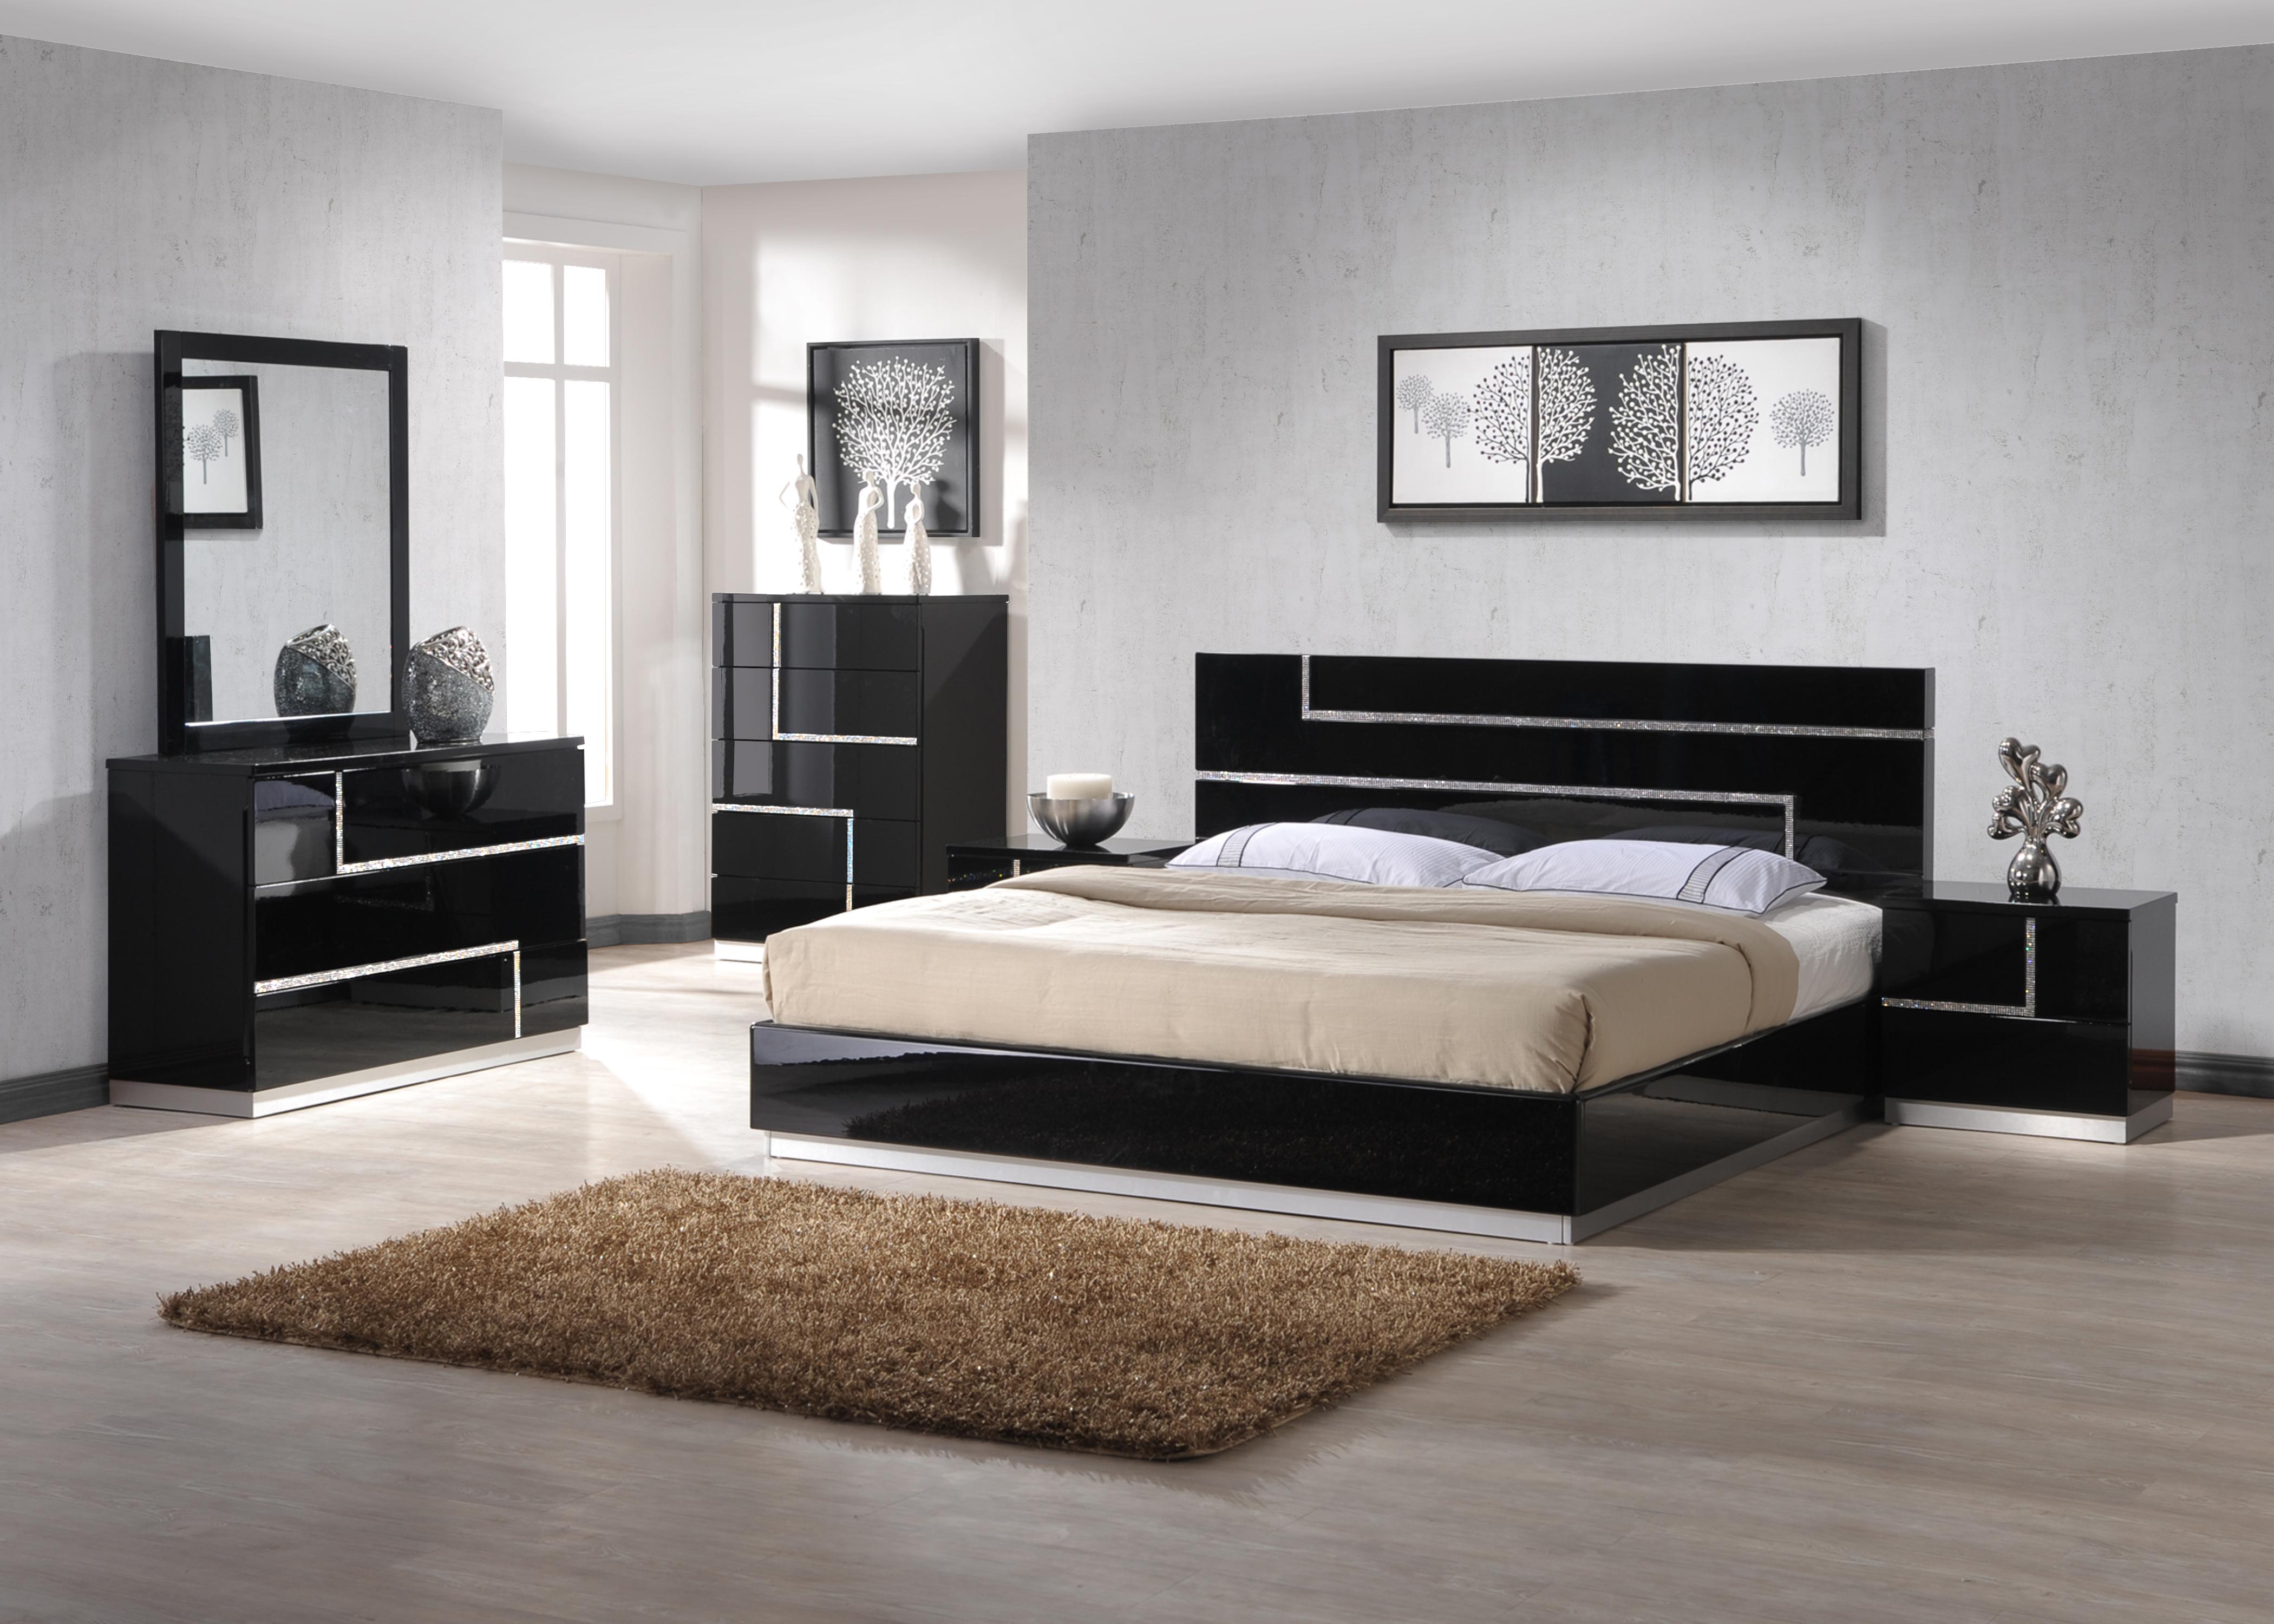 

    
Glossy Black w/Crystals Inlay Lowrey Platform KING Bedroom Set 5P Contemporary
